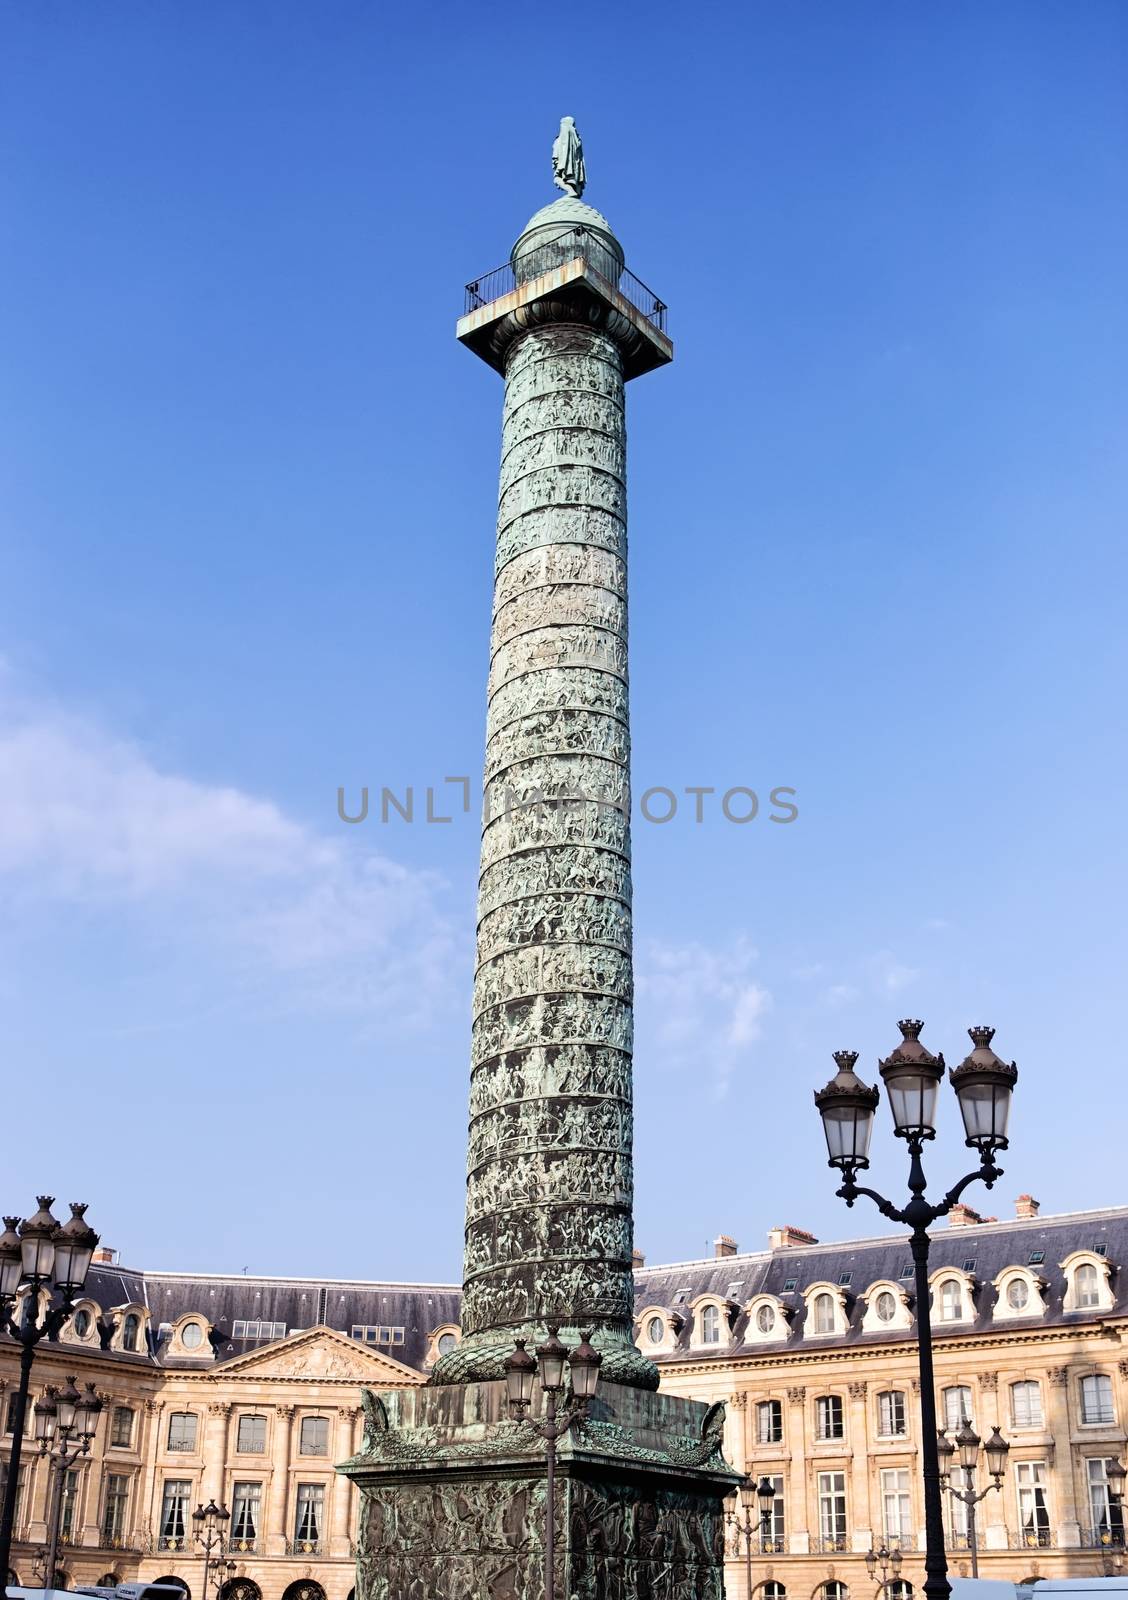 Napoleon's column in Paris by mitakag